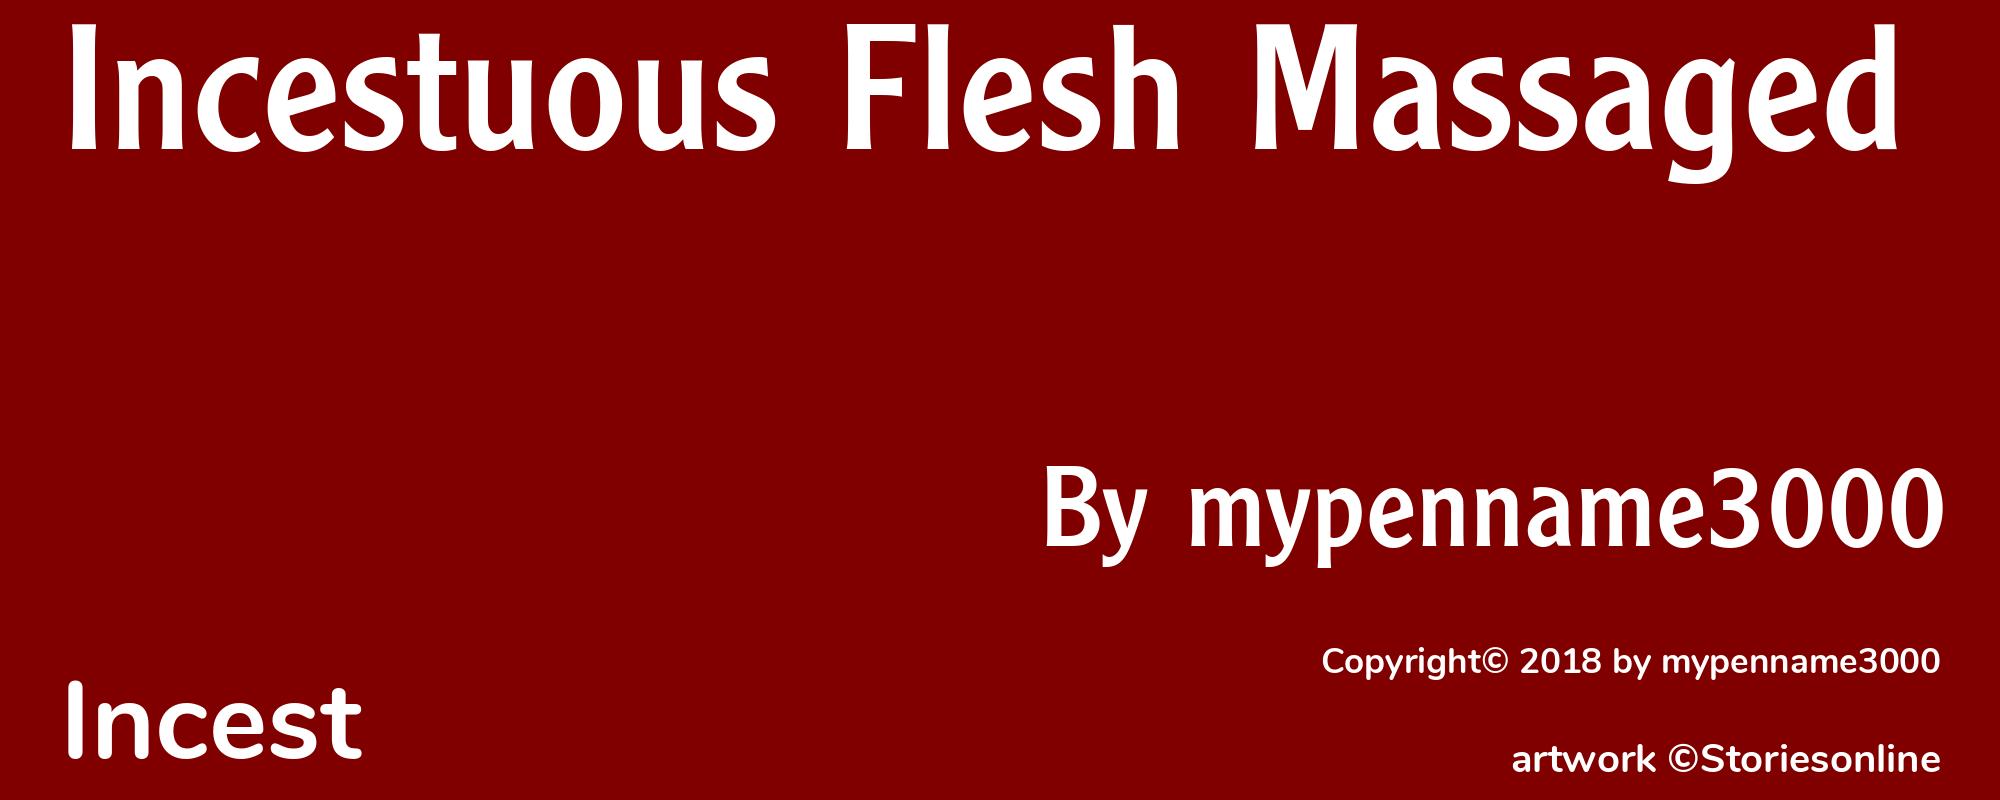 Incestuous Flesh Massaged - Cover